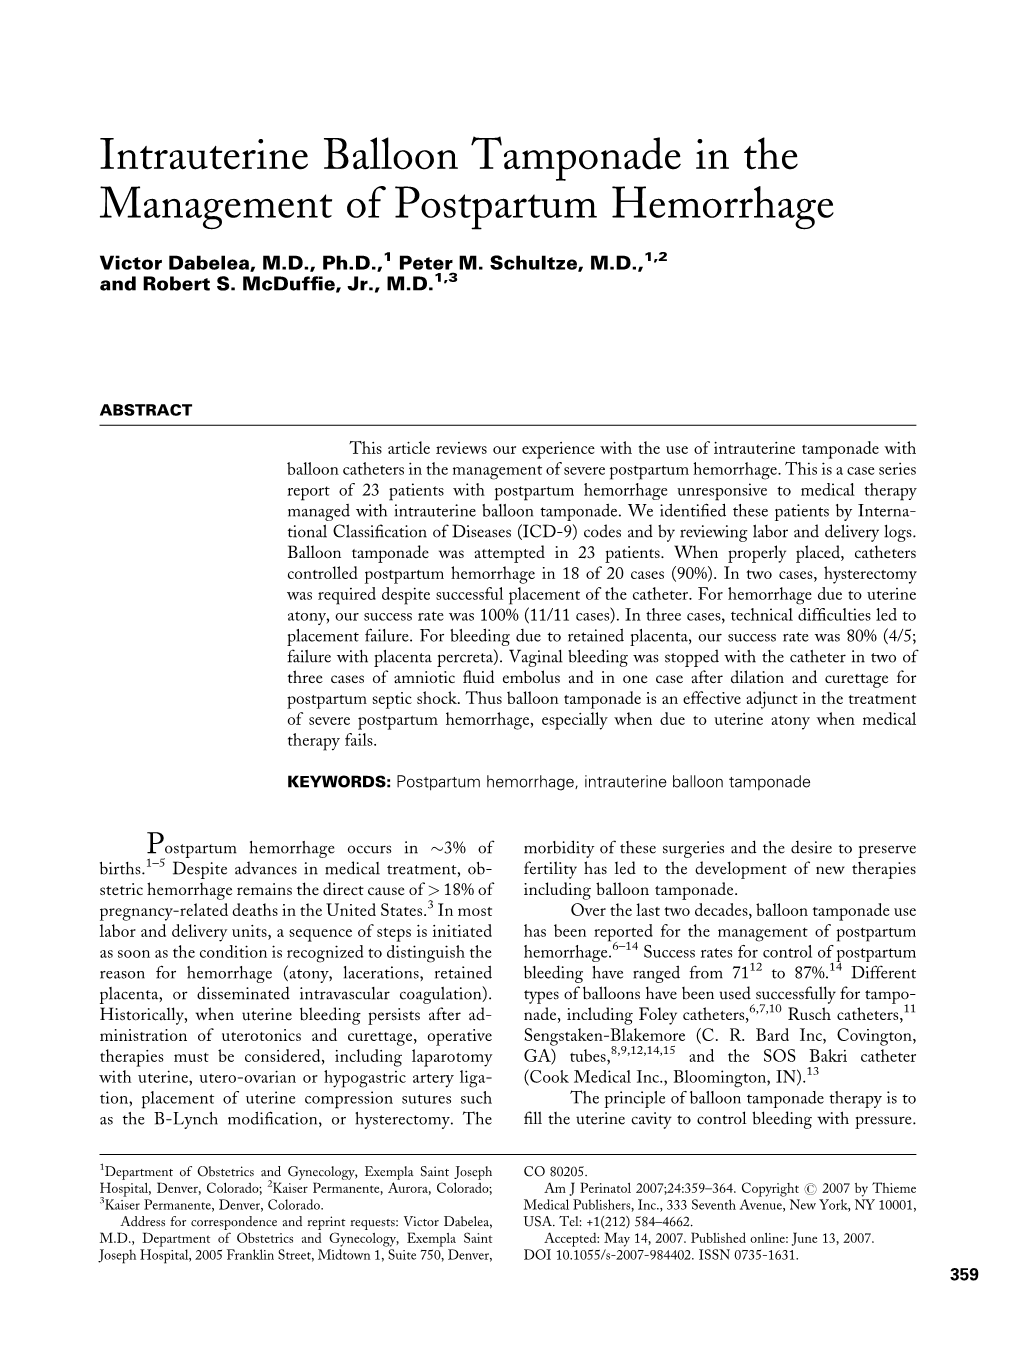 Intrauterine Balloon Tamponade in the Management of Postpartum Hemorrhage